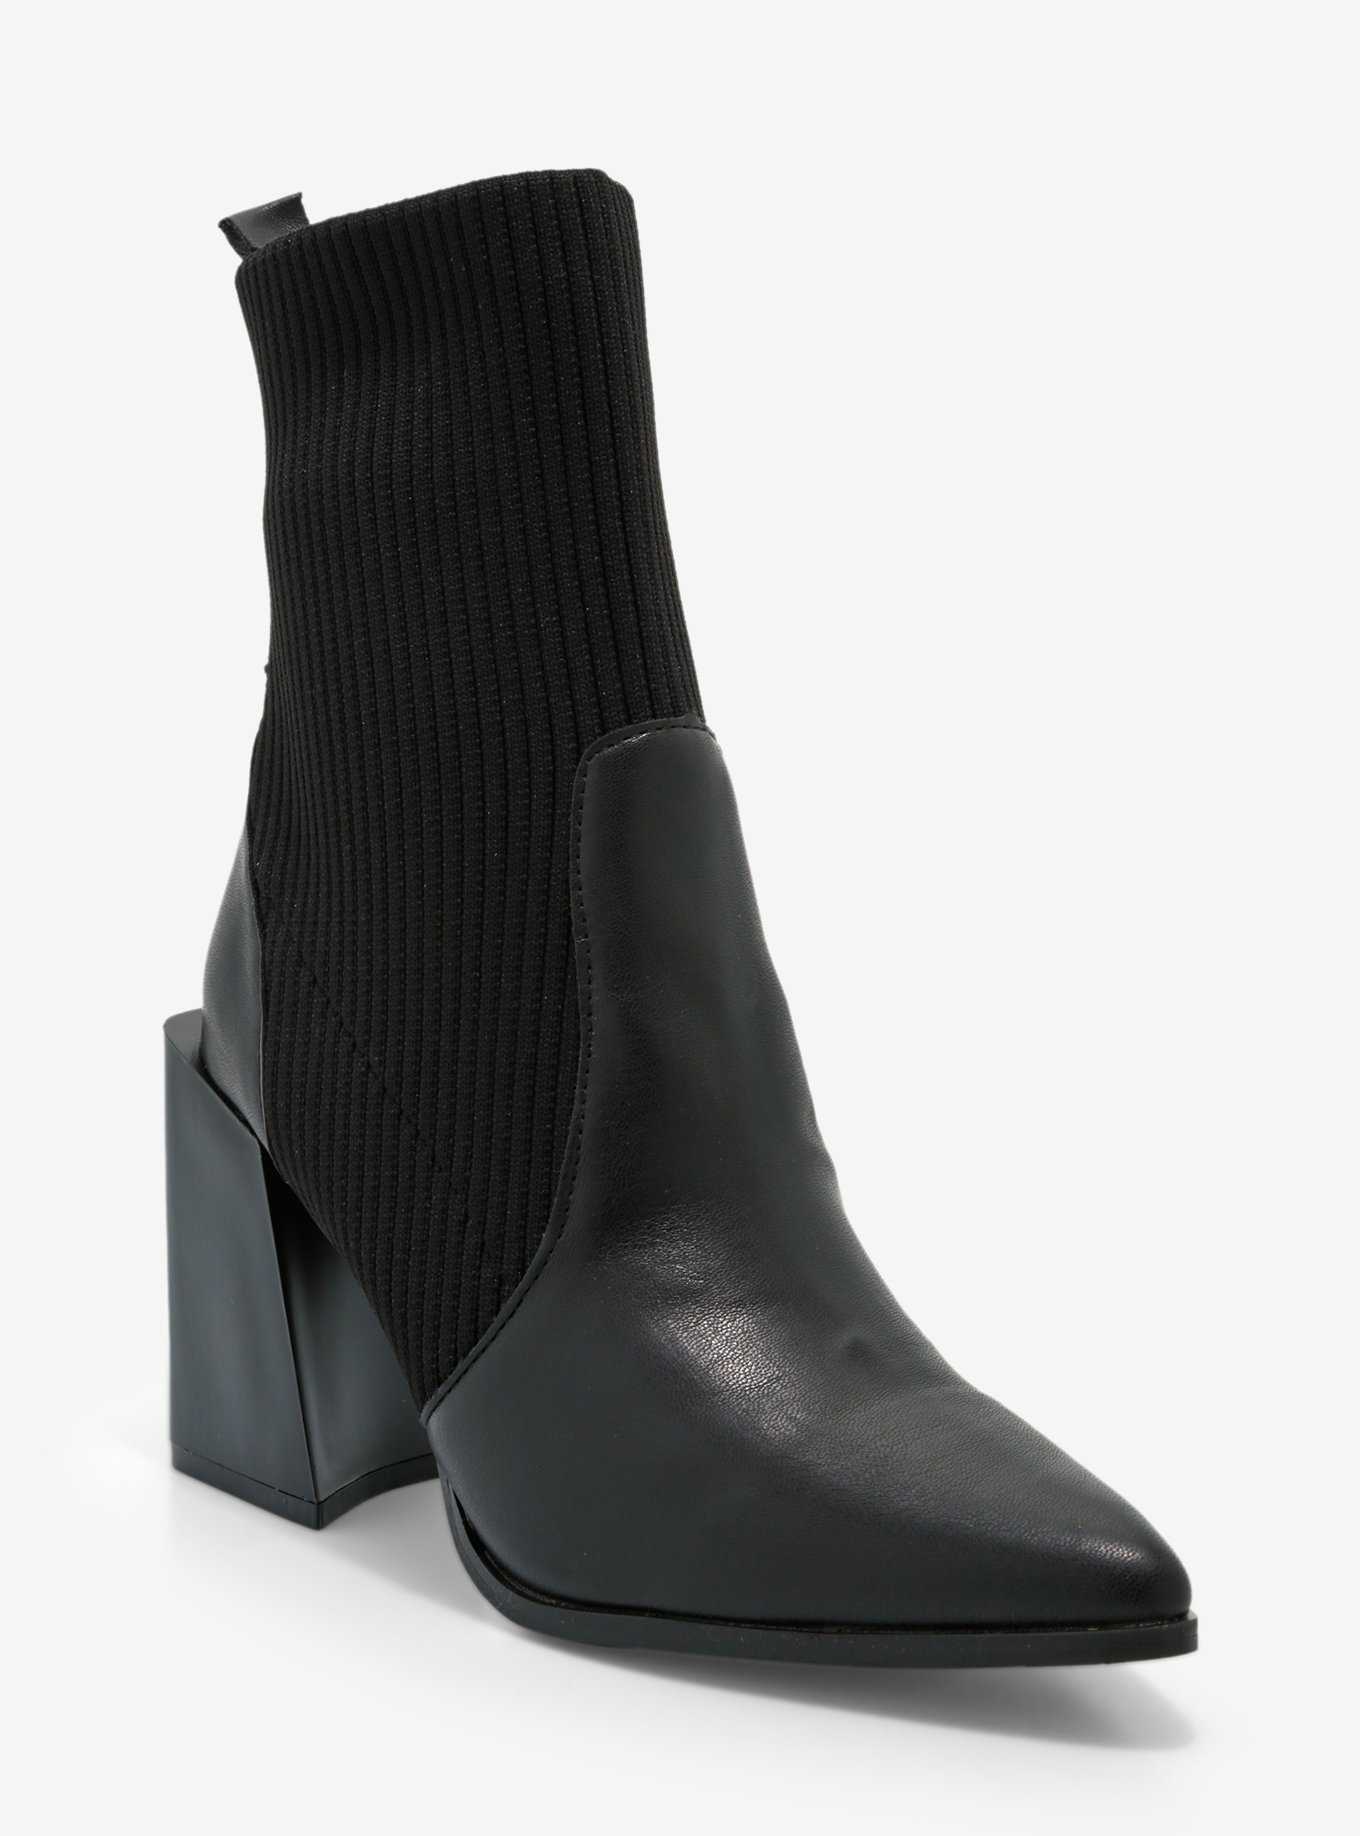 Yoki Black Ankle Sock Boots, , hi-res